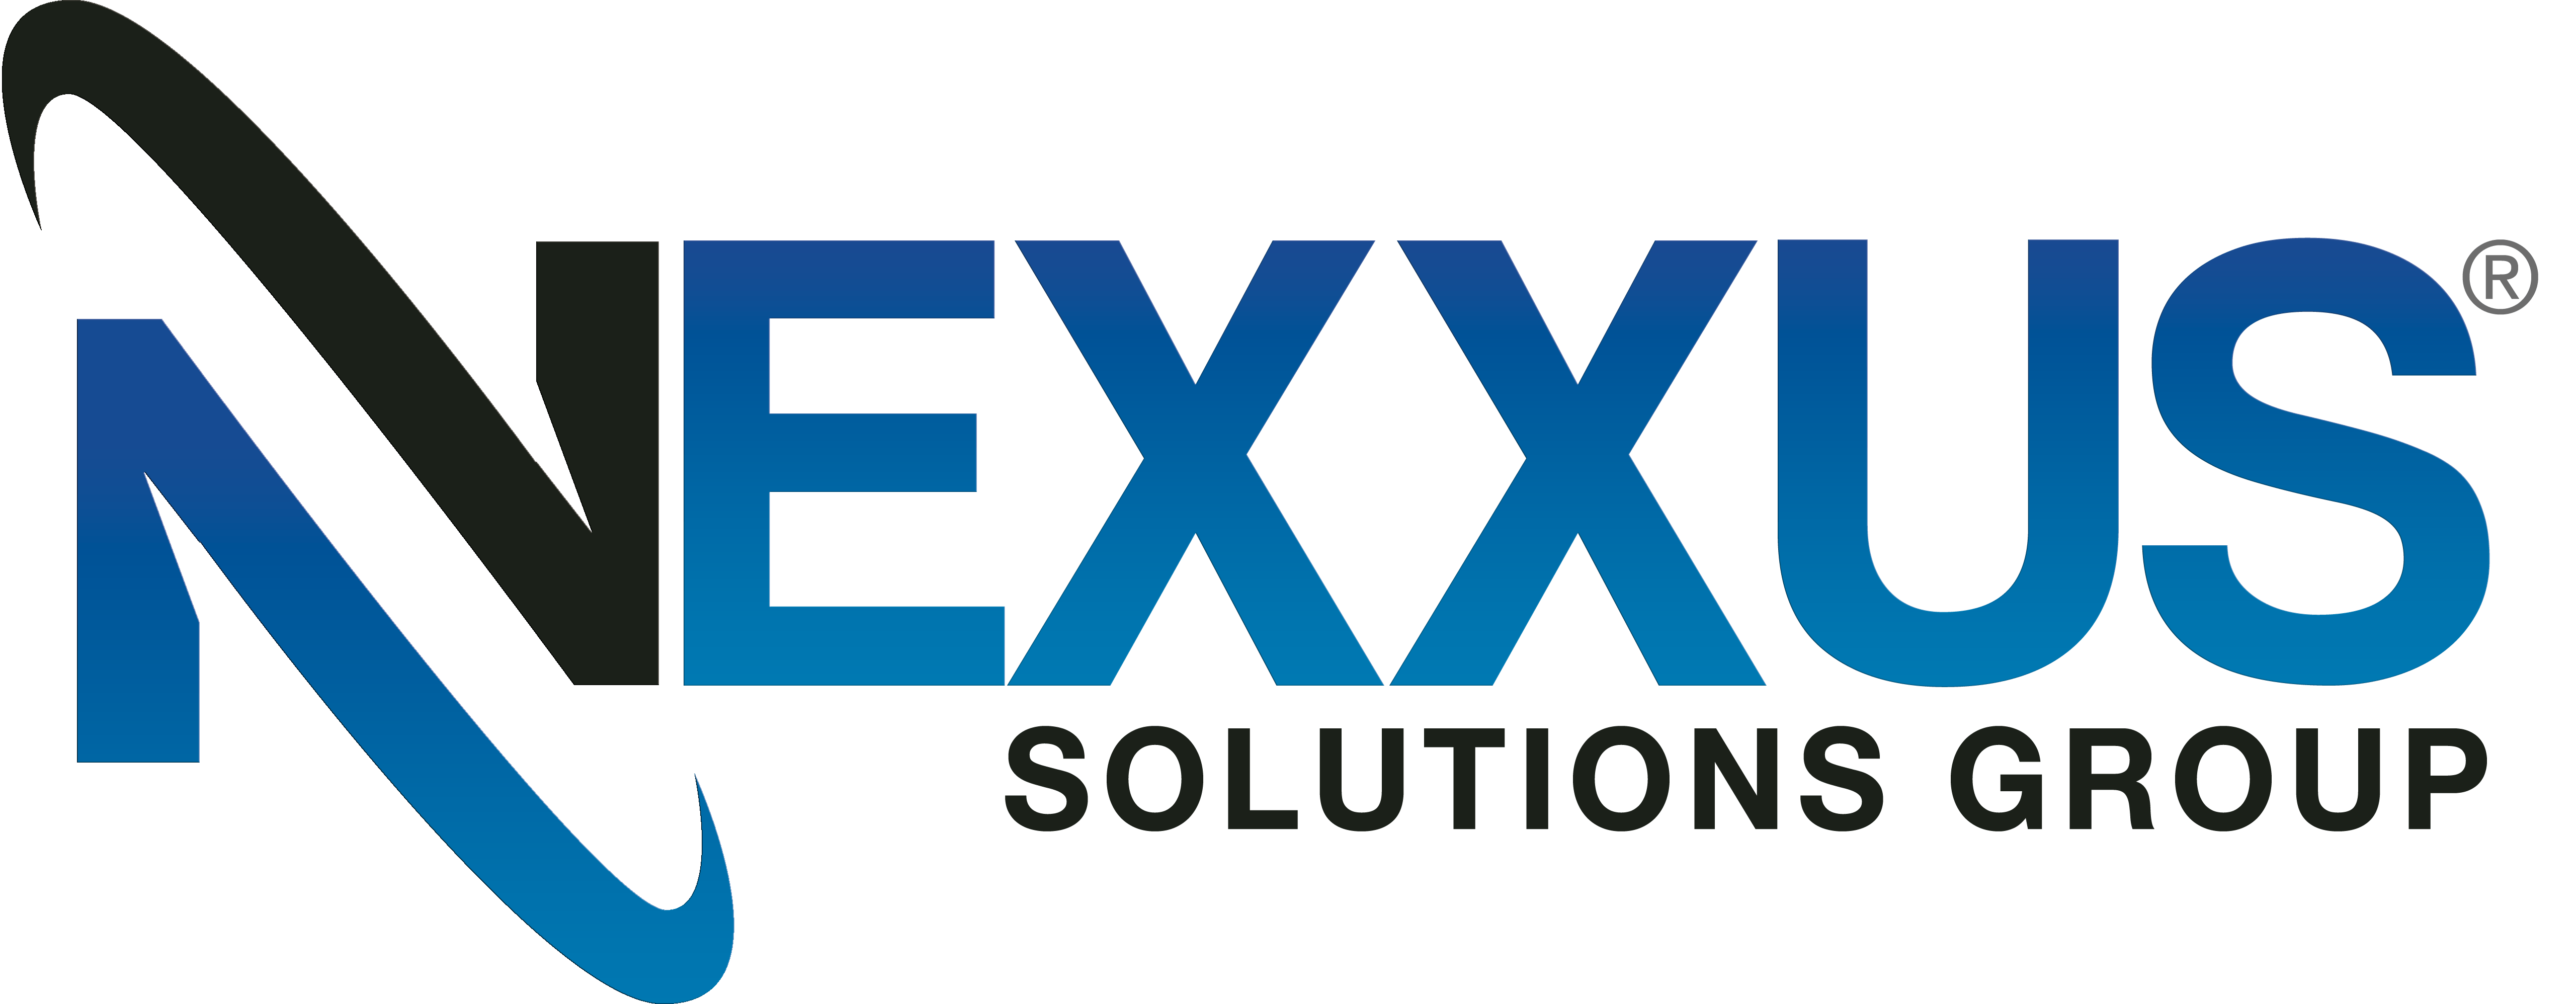 Nexxus Logo - Home | Nexxus National Conference